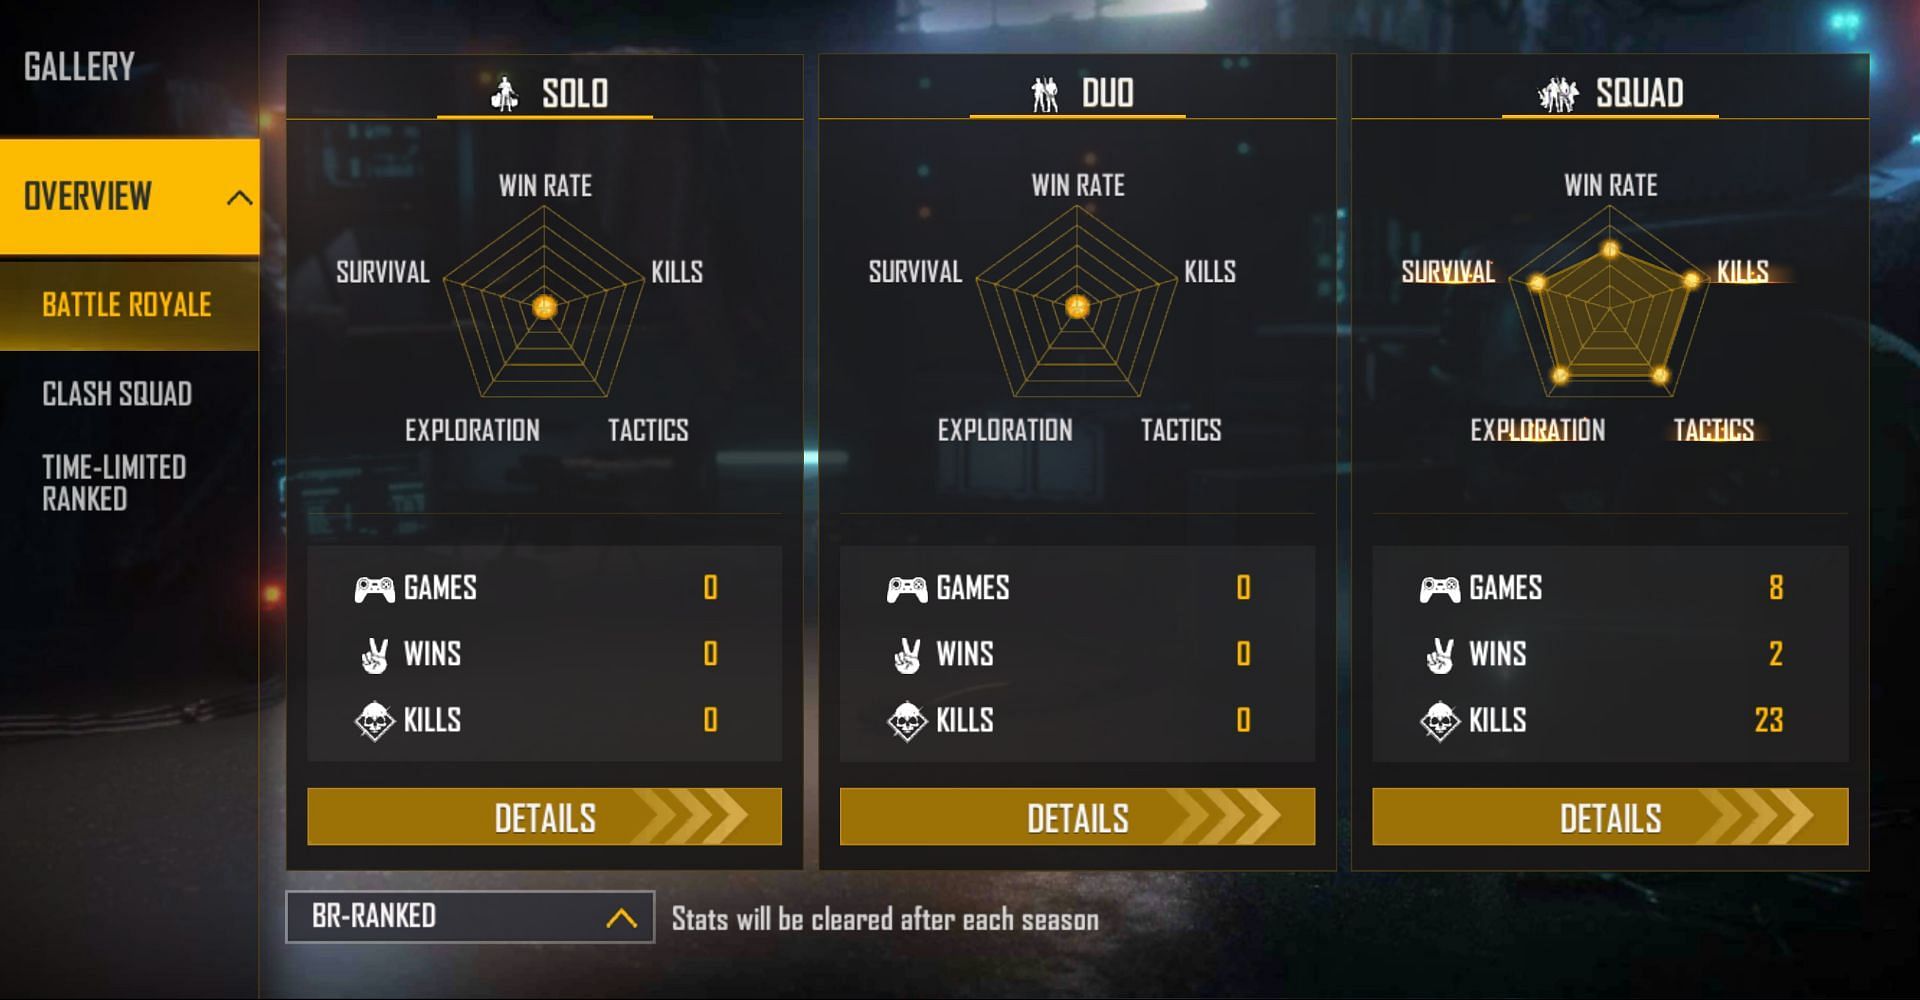 Raistar has only played squad games (Image via Garena)